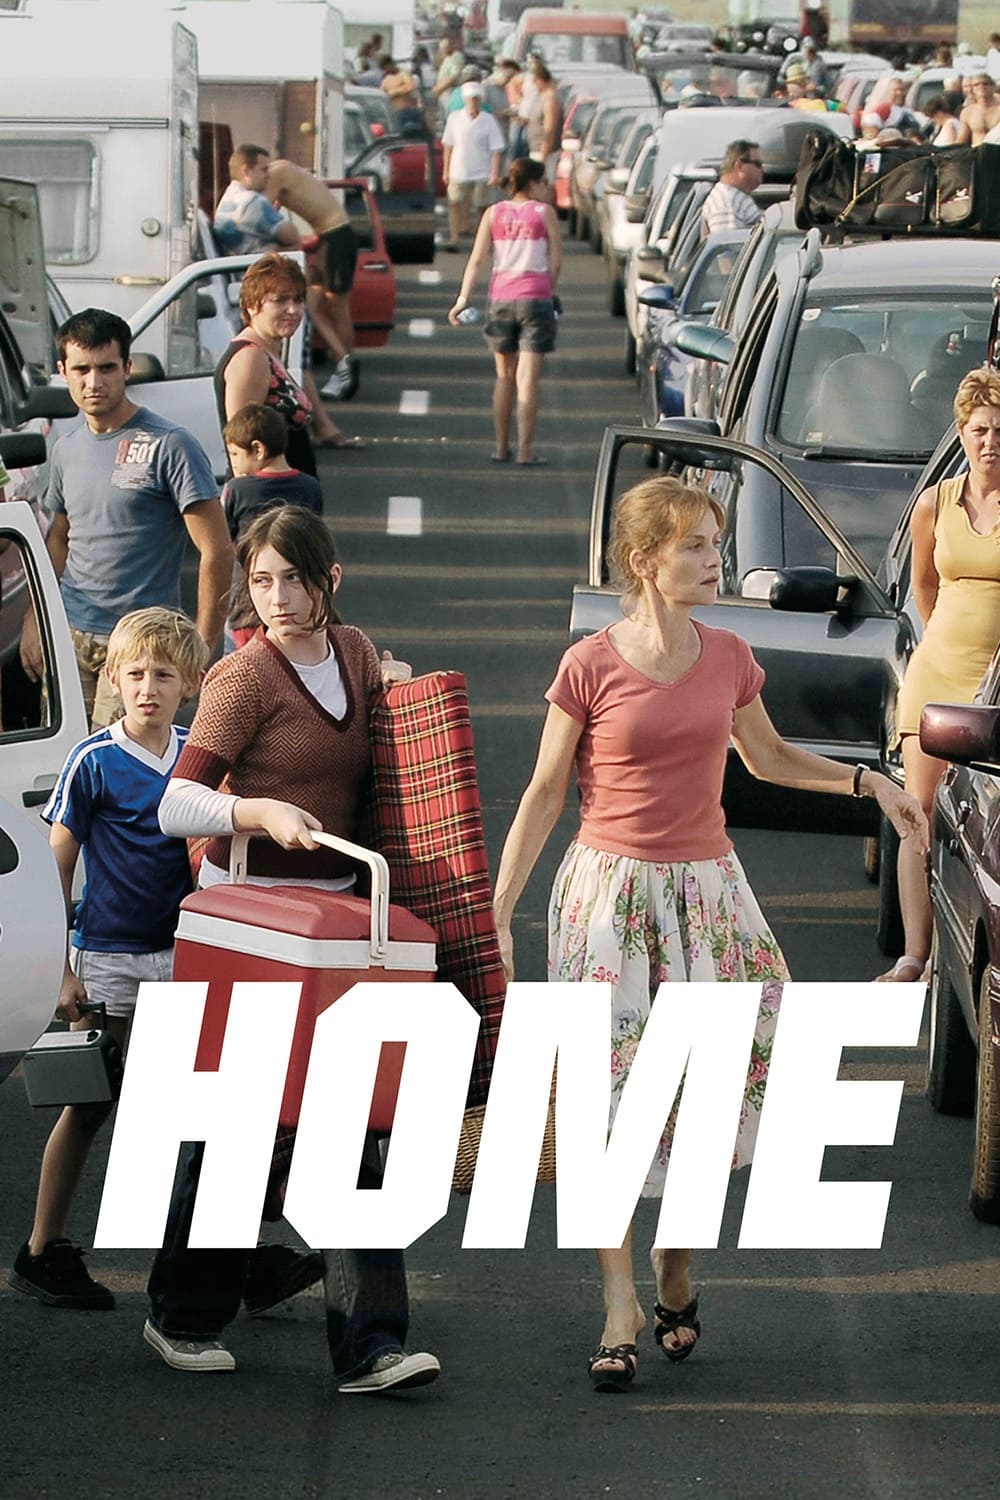 Home (2008)